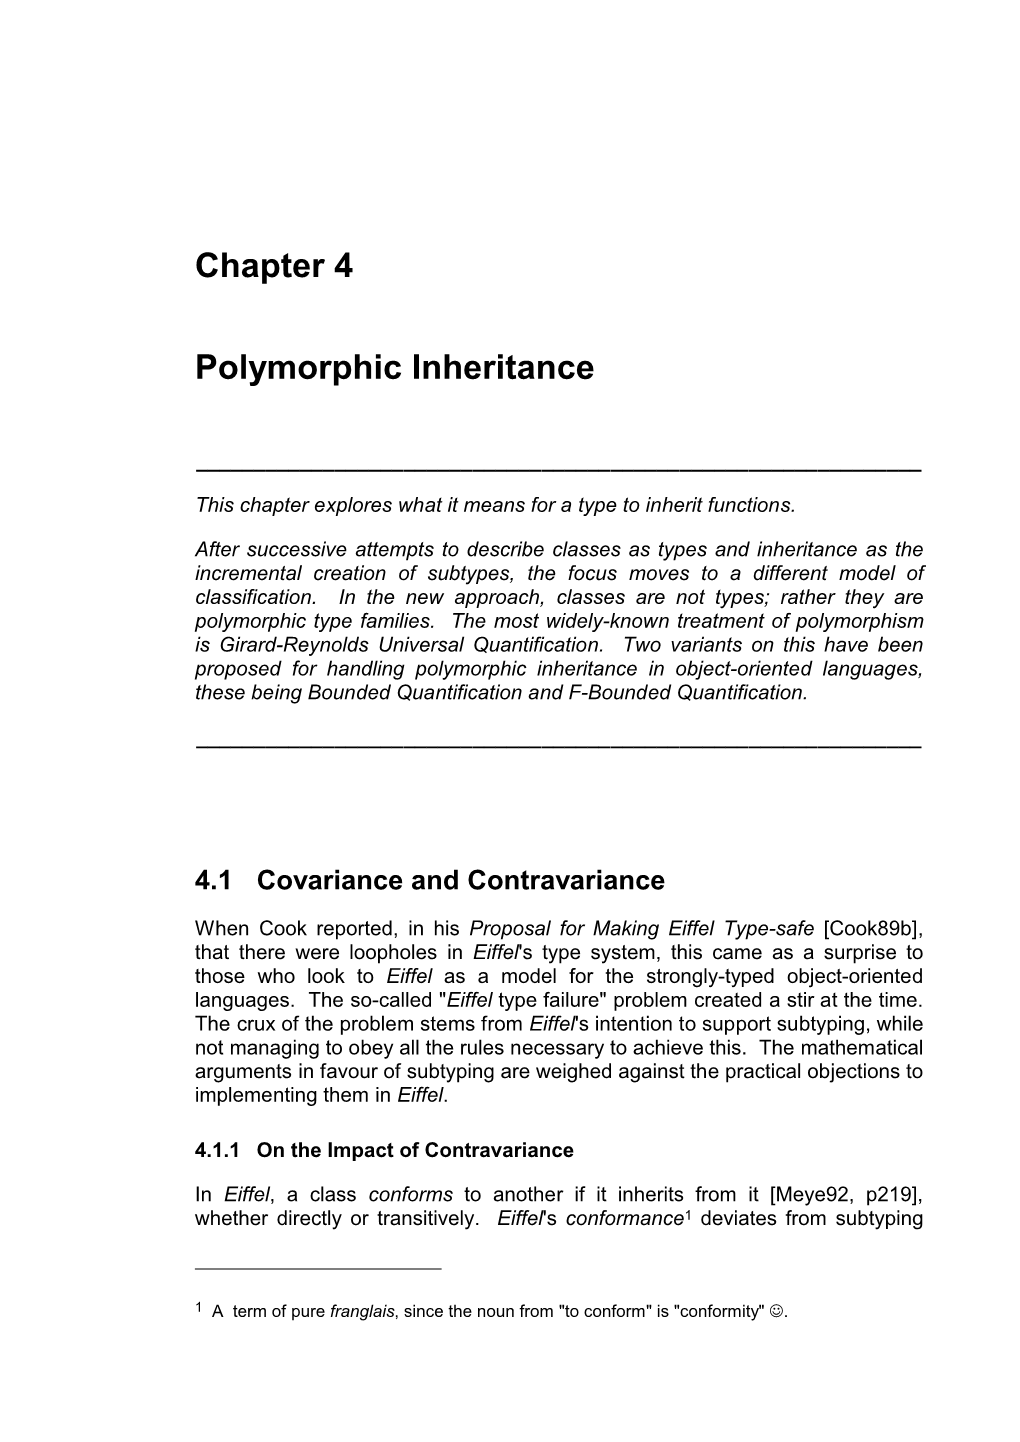 Chapter 4 Polymorphic Inheritance